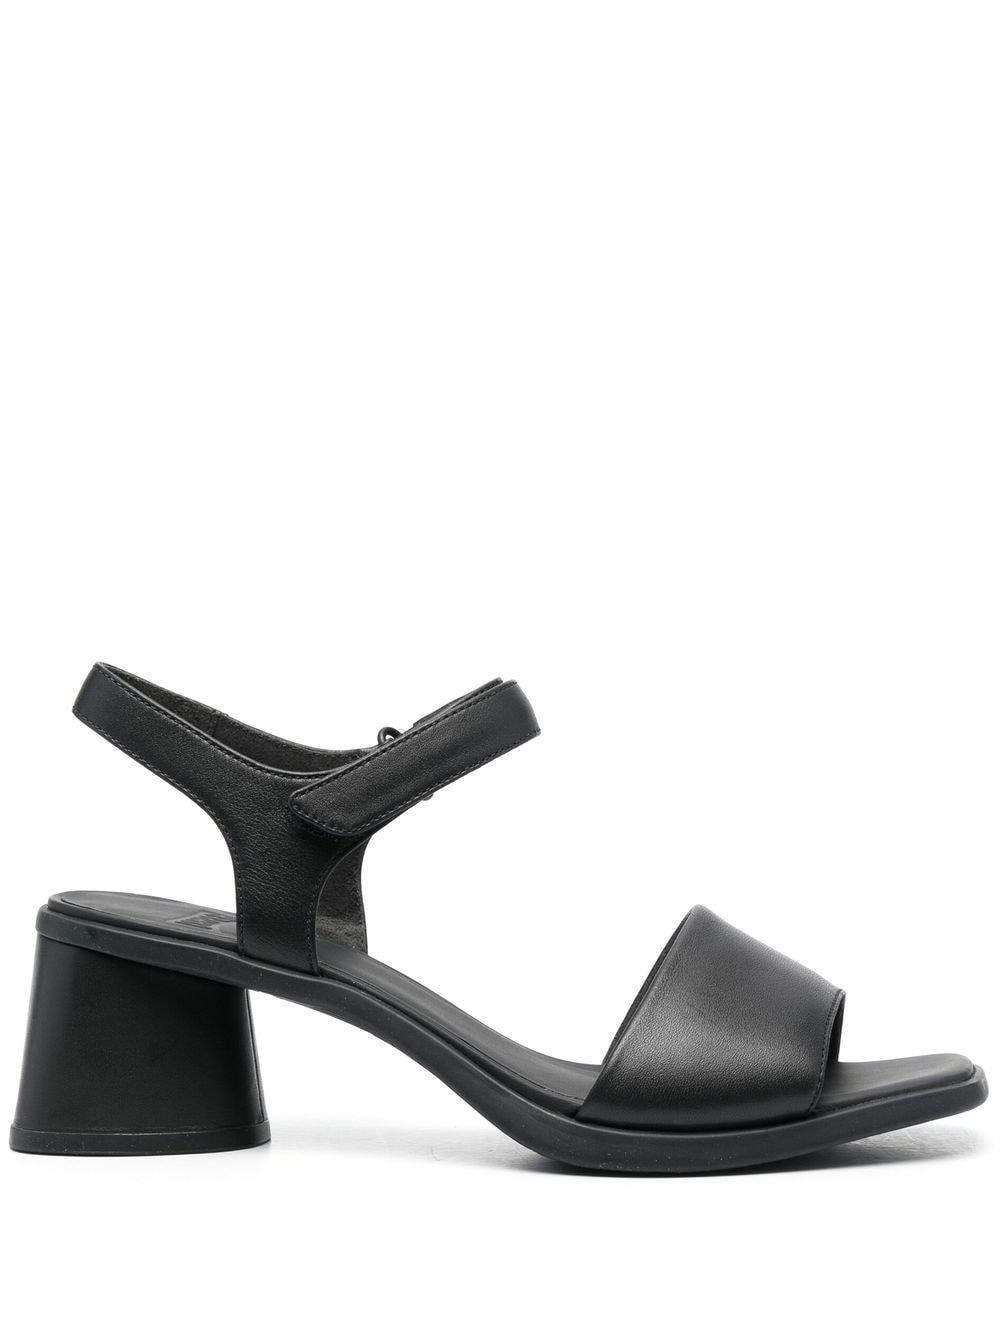 Camper Kiara Leather Sandals in Black | Lyst